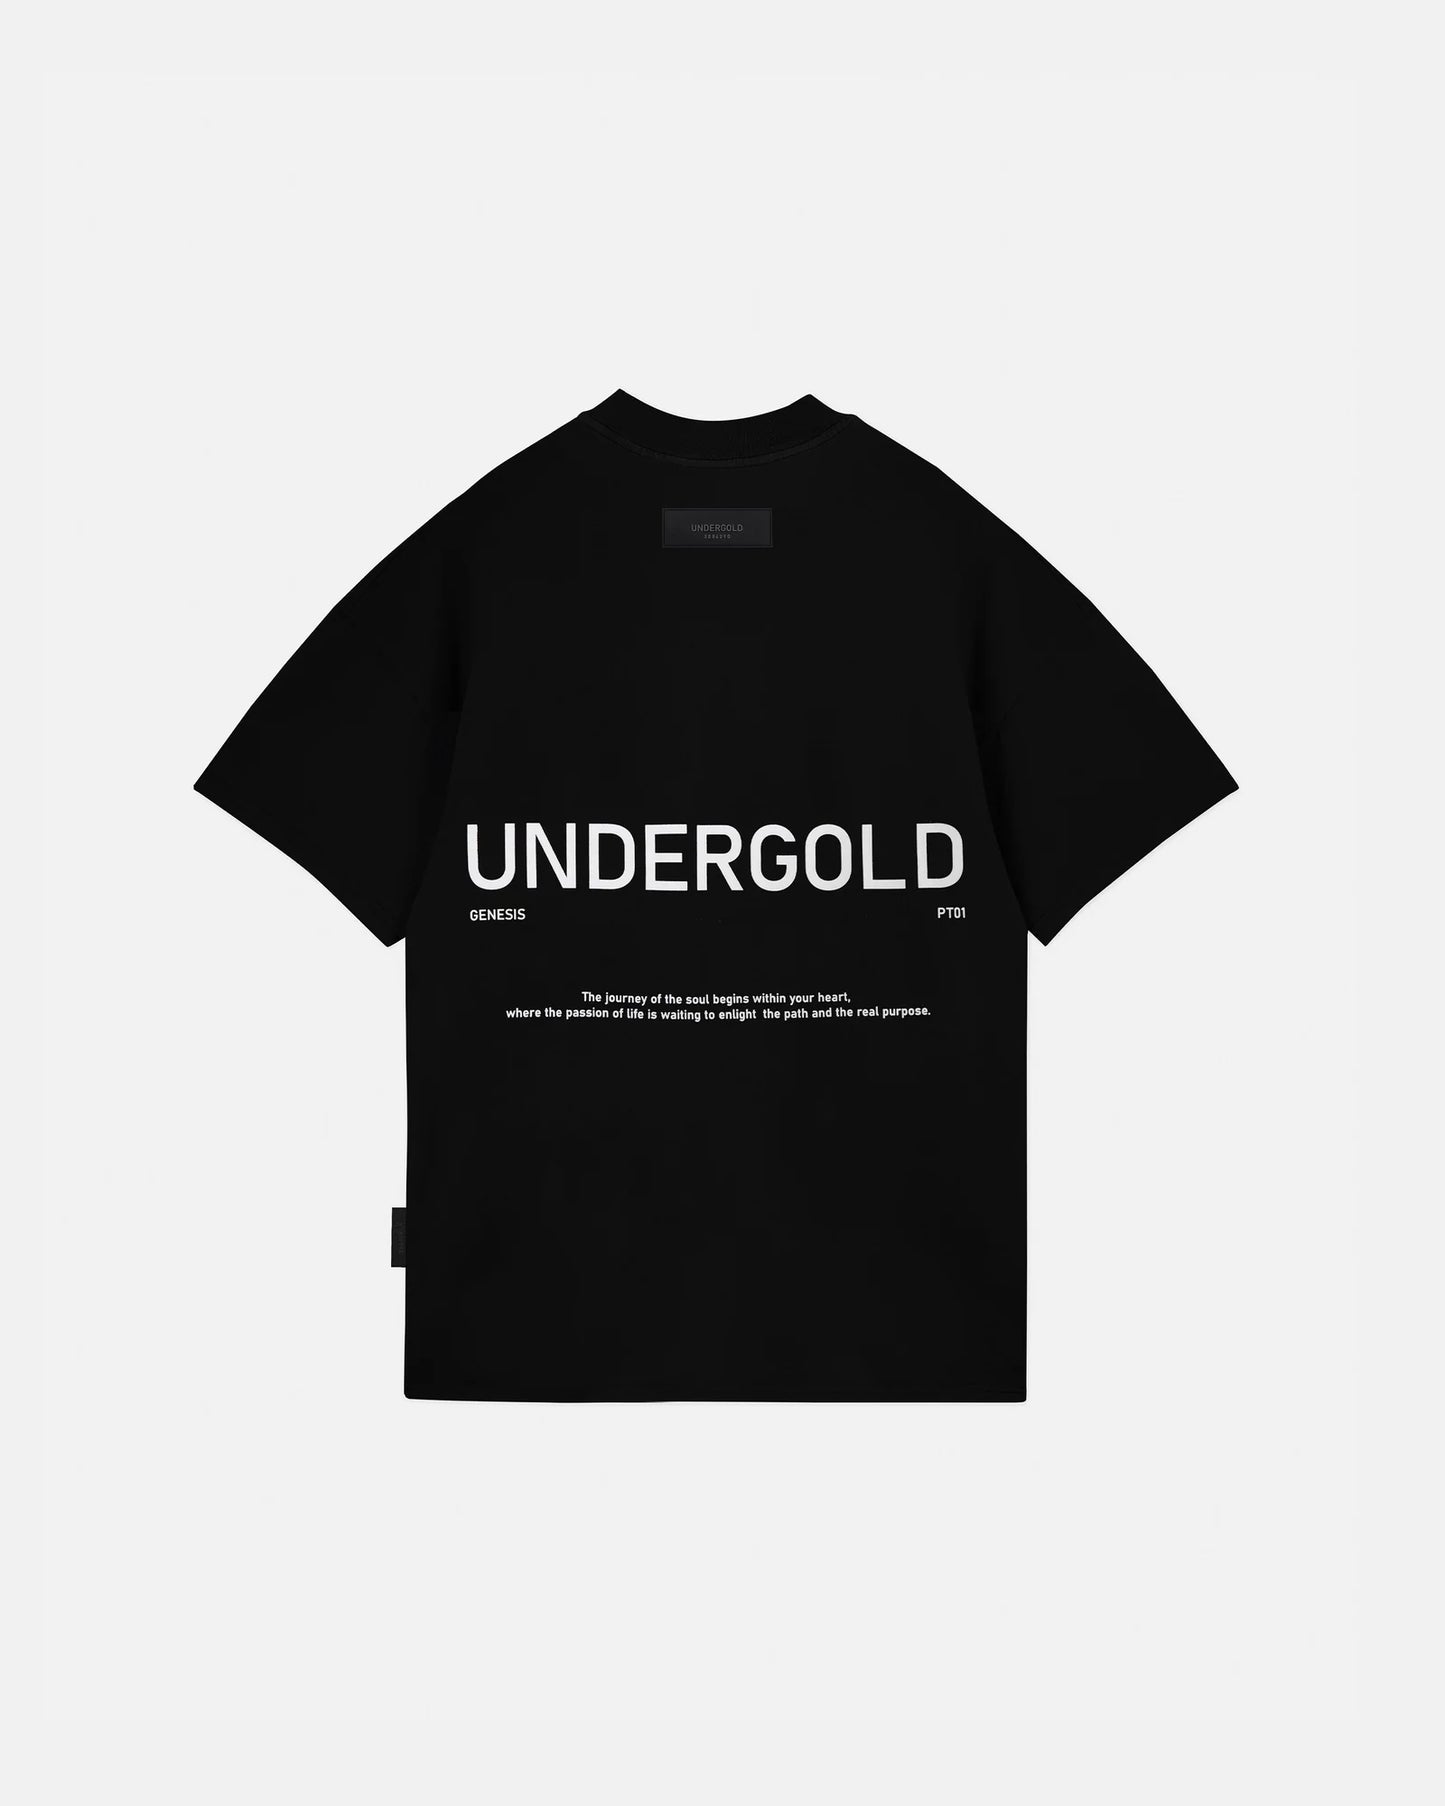 UNDERGOLD Genesis PT01 Golden Gate T-shirt Black